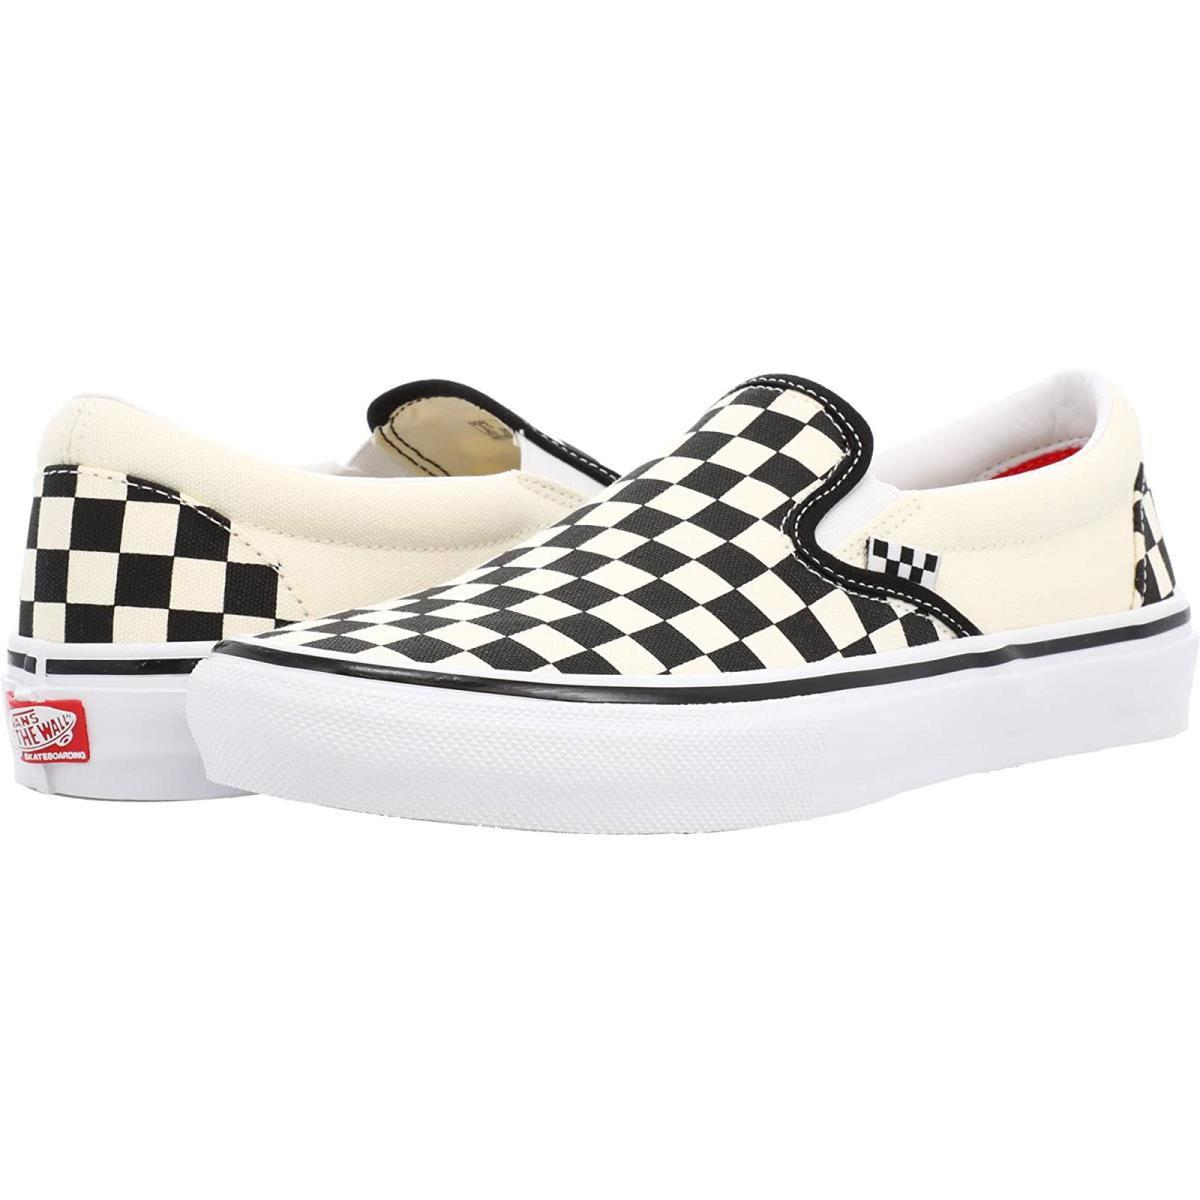 Man`s Sneakers Athletic Shoes Vans Skate Slip-on (Checkerboard) Black/Off-White